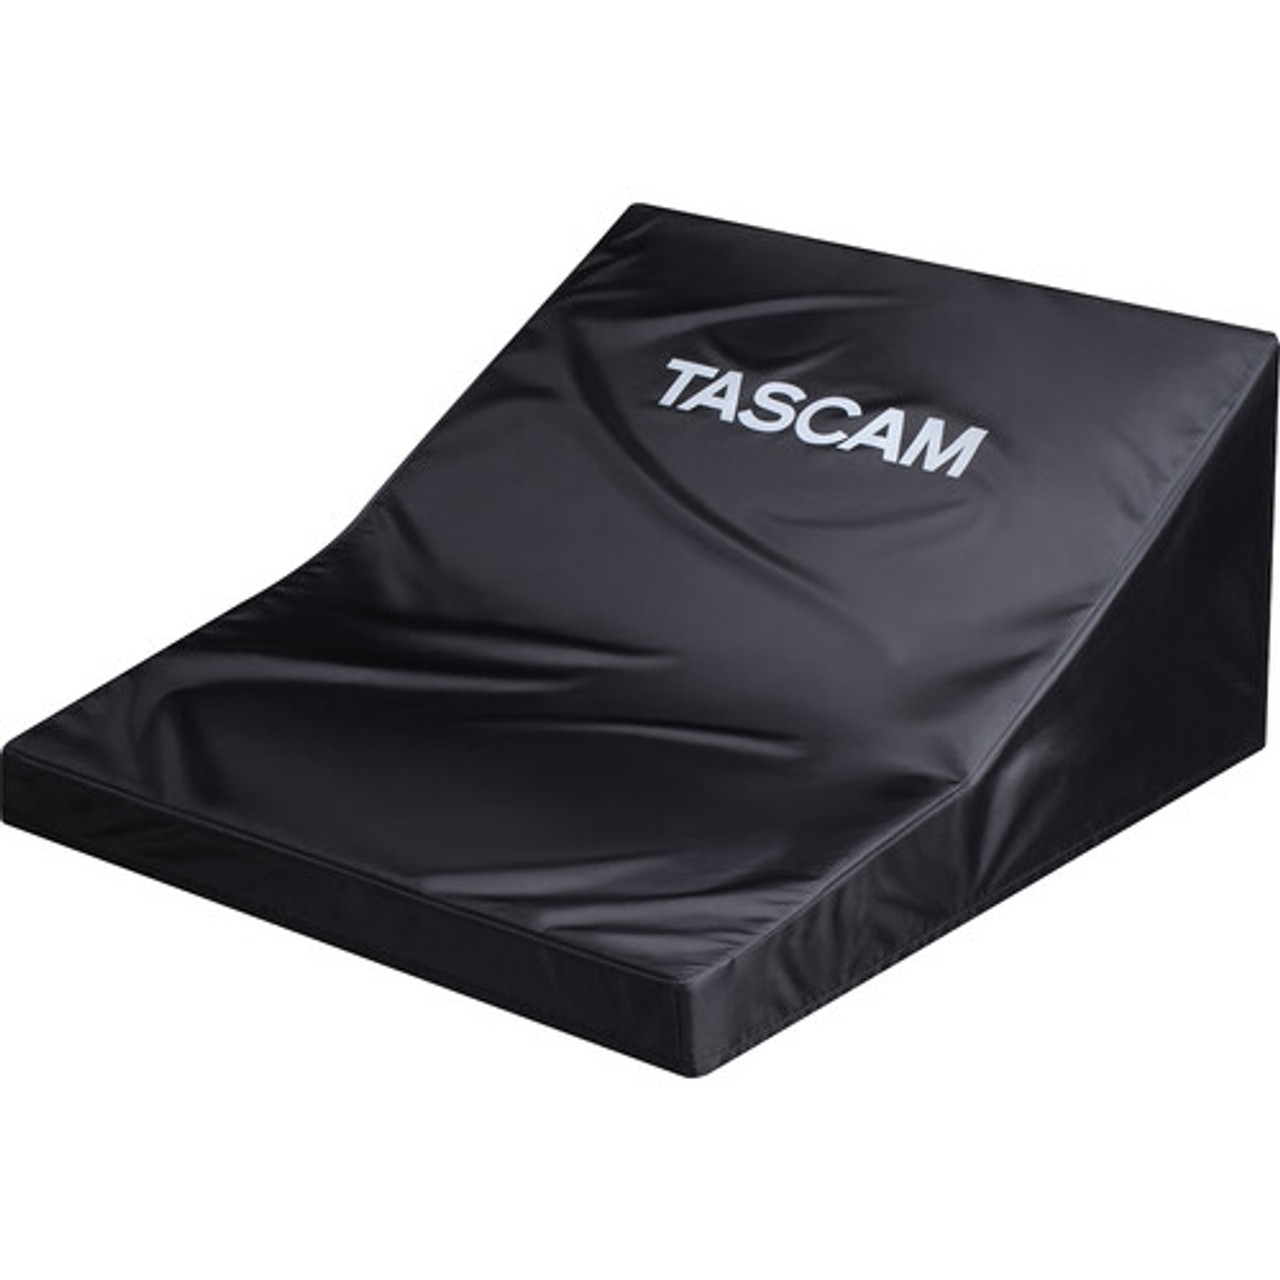 Tascam AK-DCSV16 Dust Cover for Sonicview 16XP Digital Mixer (AK-DCSV16)